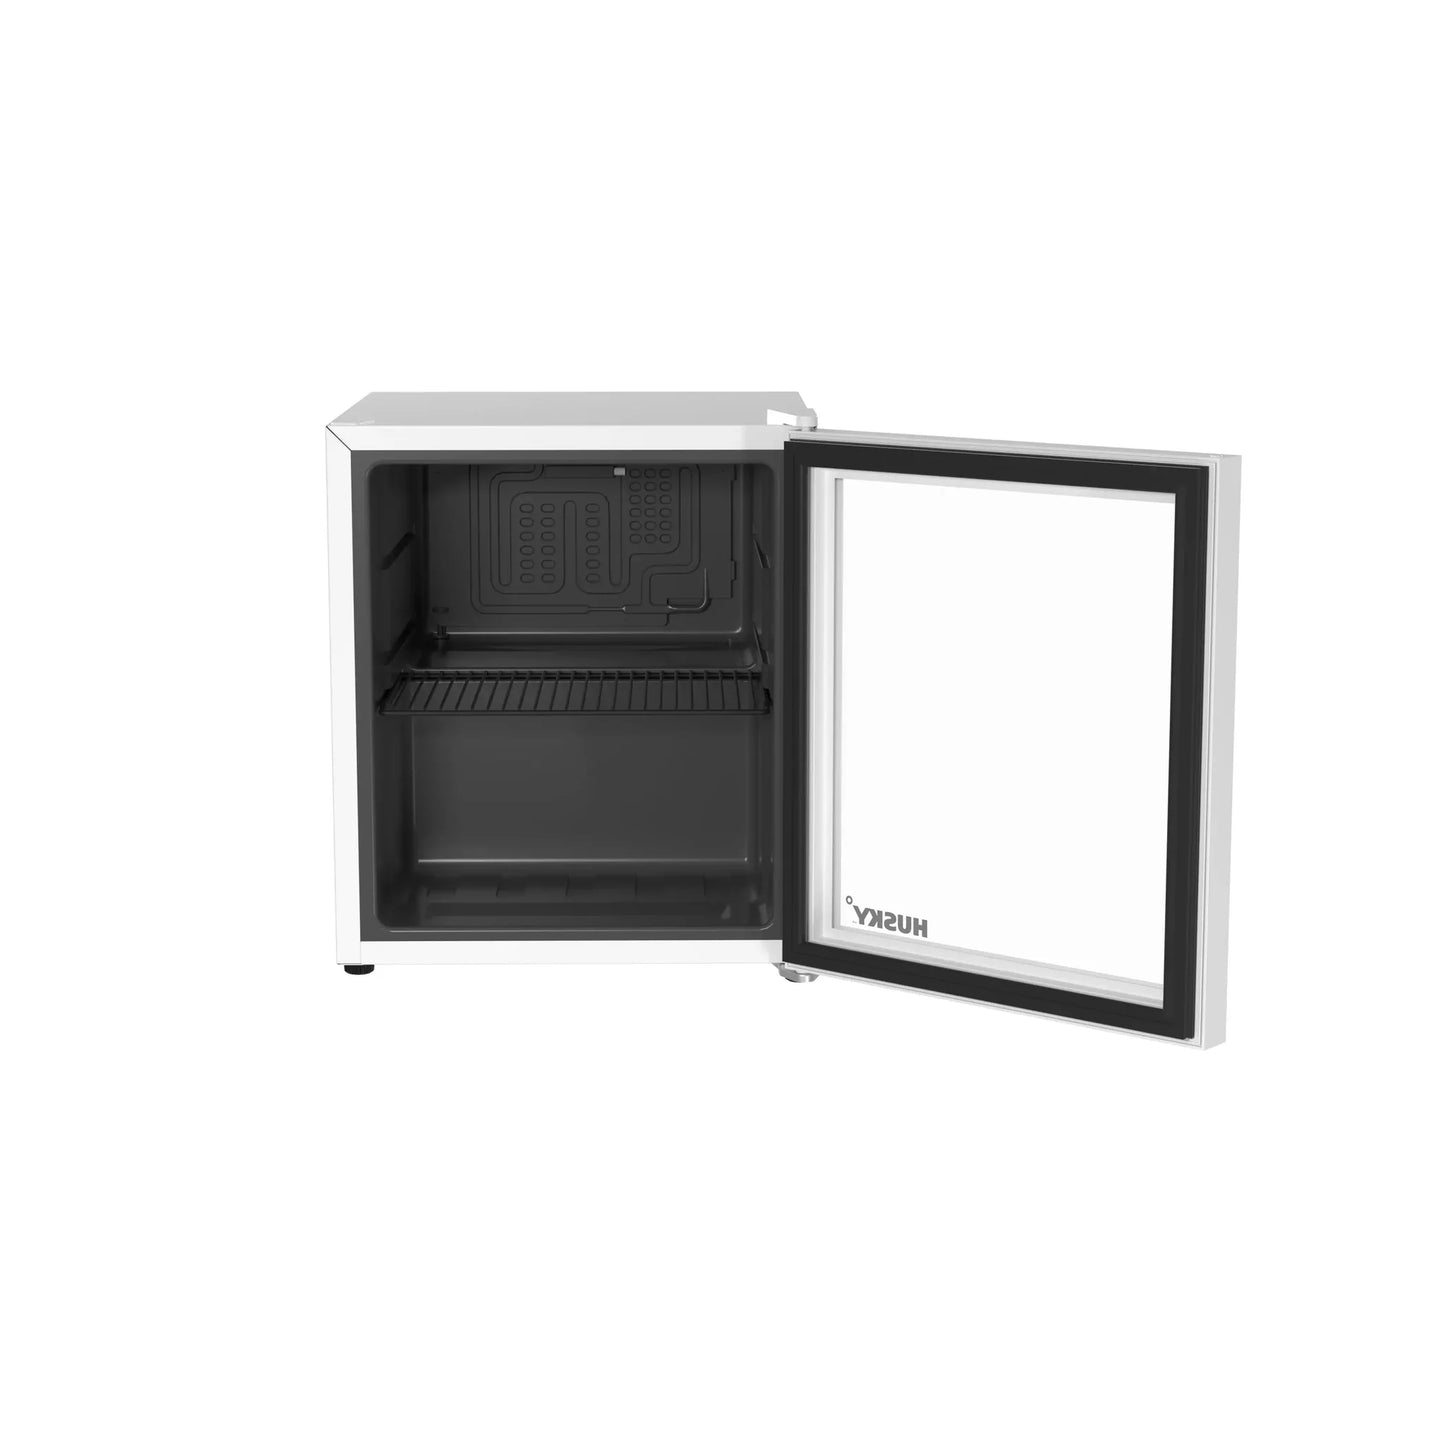 Husky 46L Beverage Refrigerator 1.6 C.ft. Freestanding Counter-Top Mini Fridge With Glass Door in White